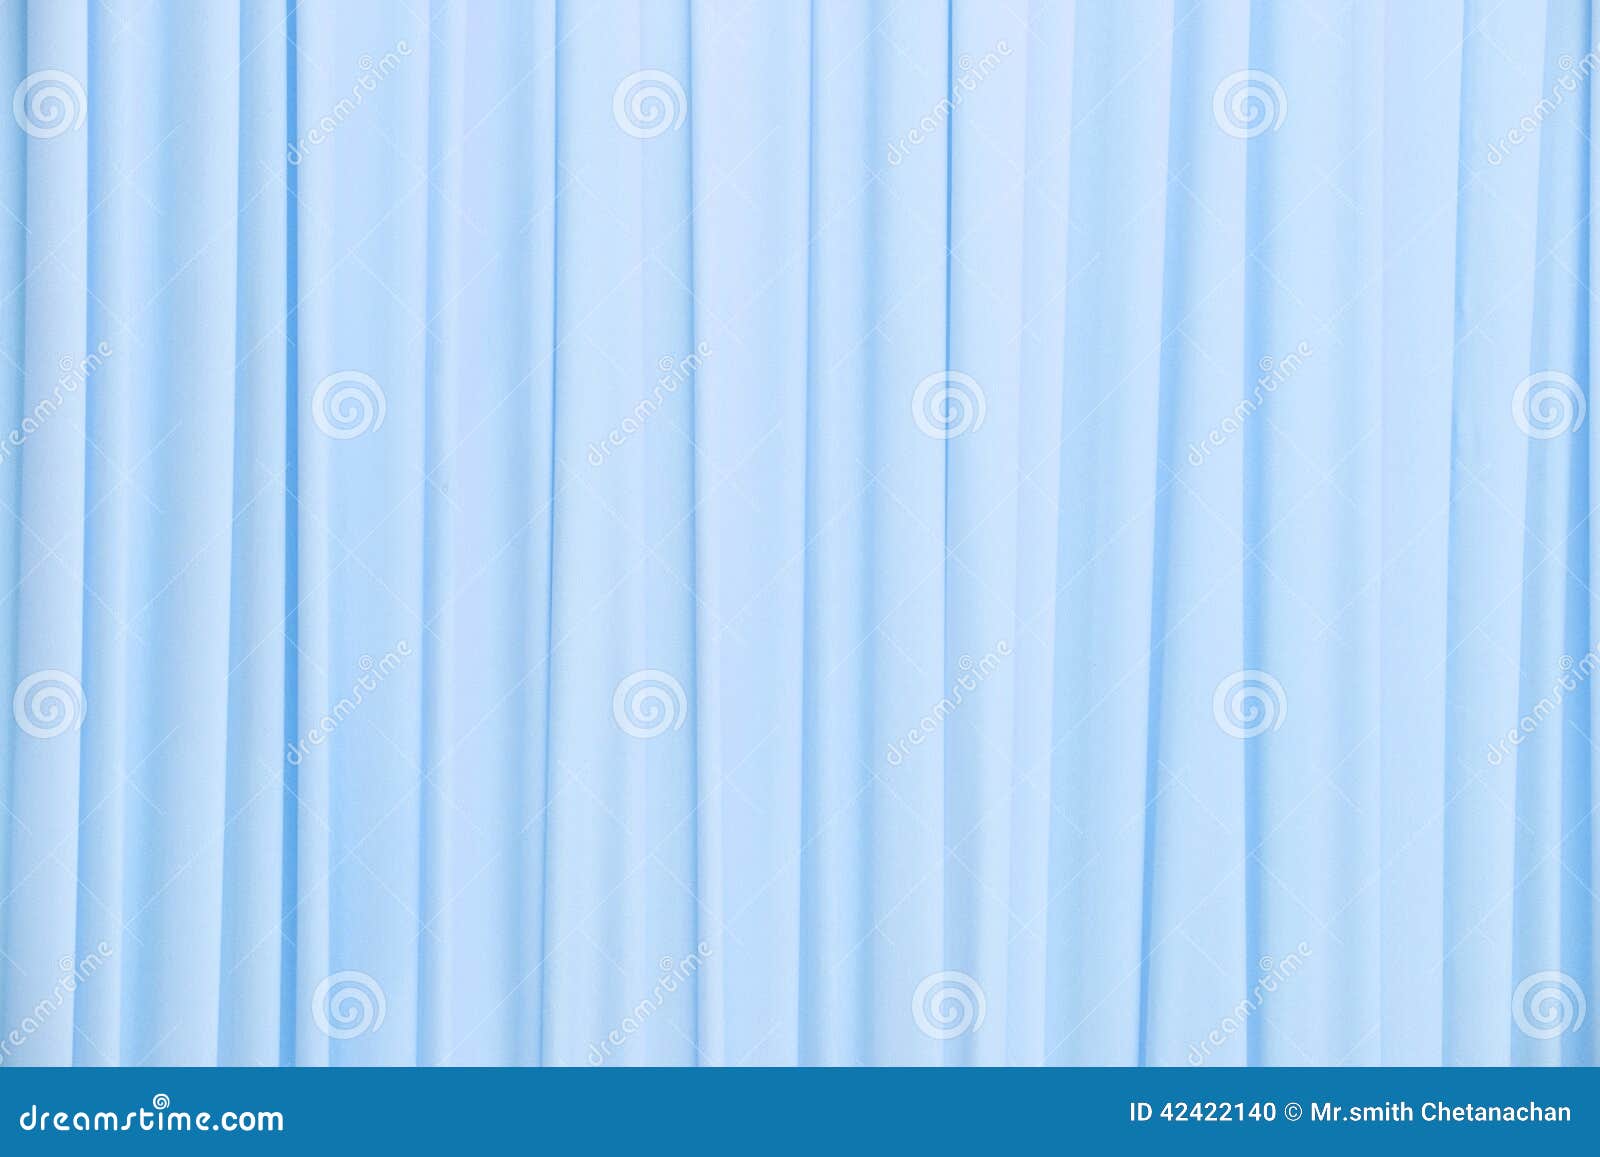 Light Blue Curtain Texture Stock Photo 42422140 - Megapixl